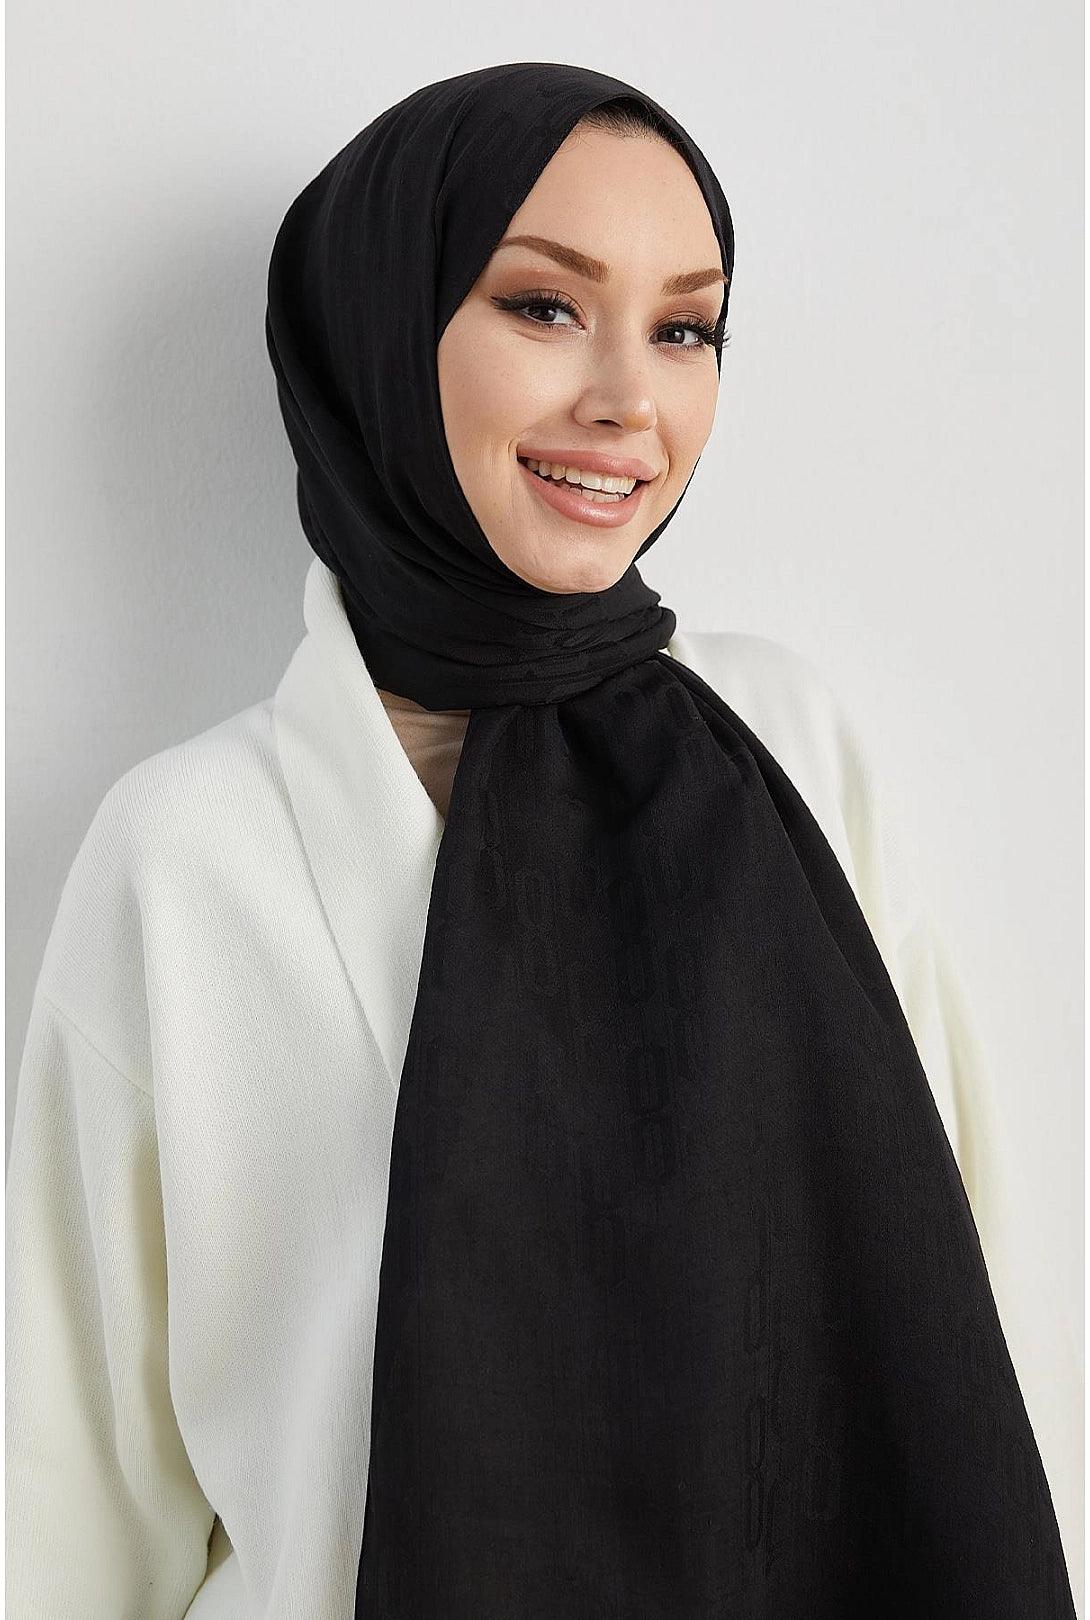 Silky Black Hijab Scarf Shawl with Chain Pattern - Black